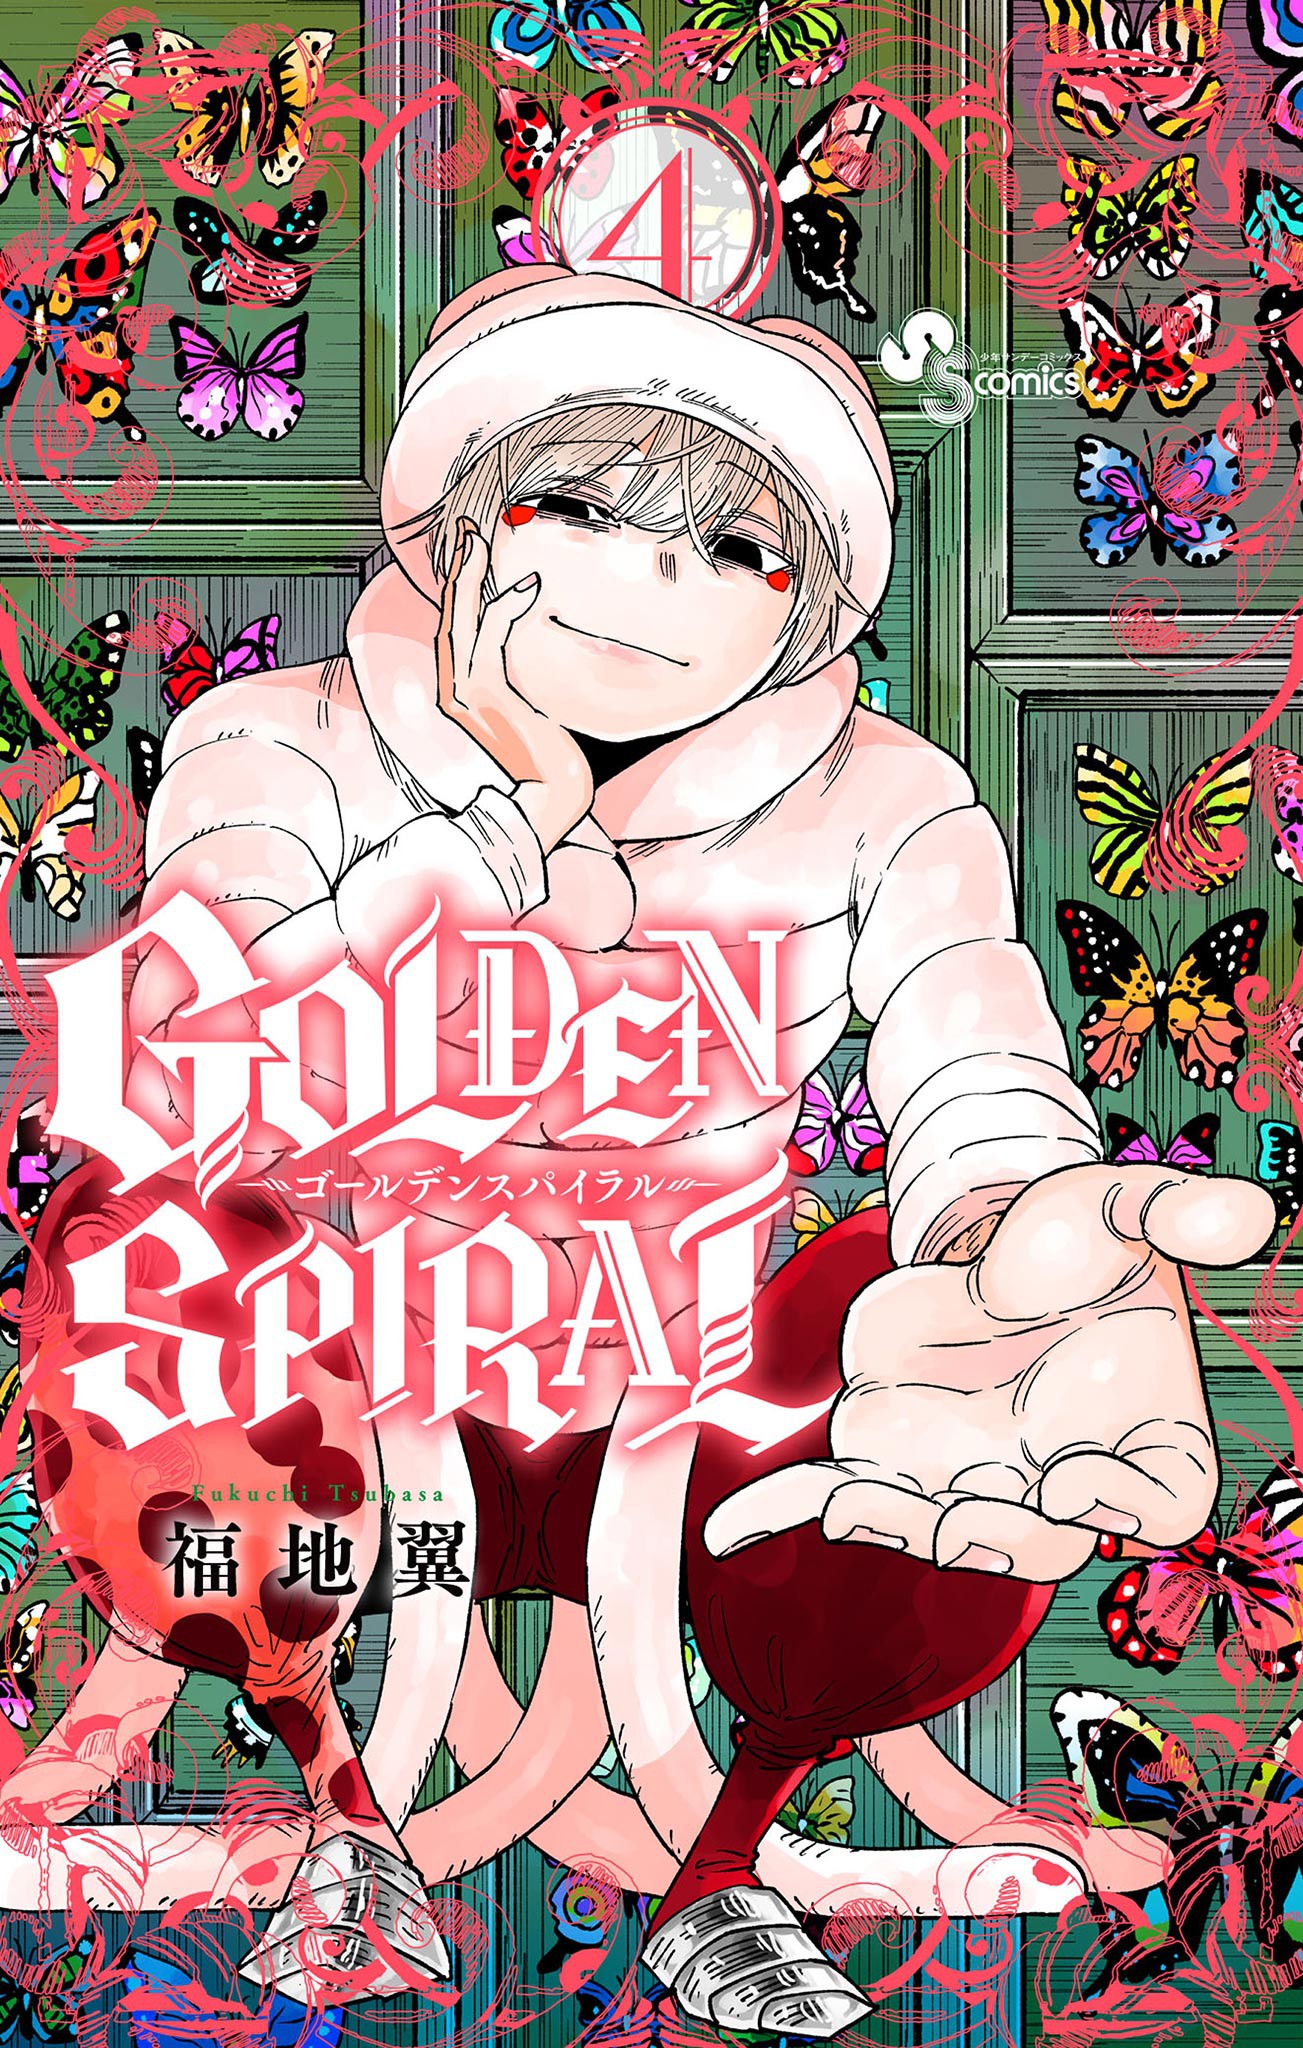 Golden Spiral cover 4